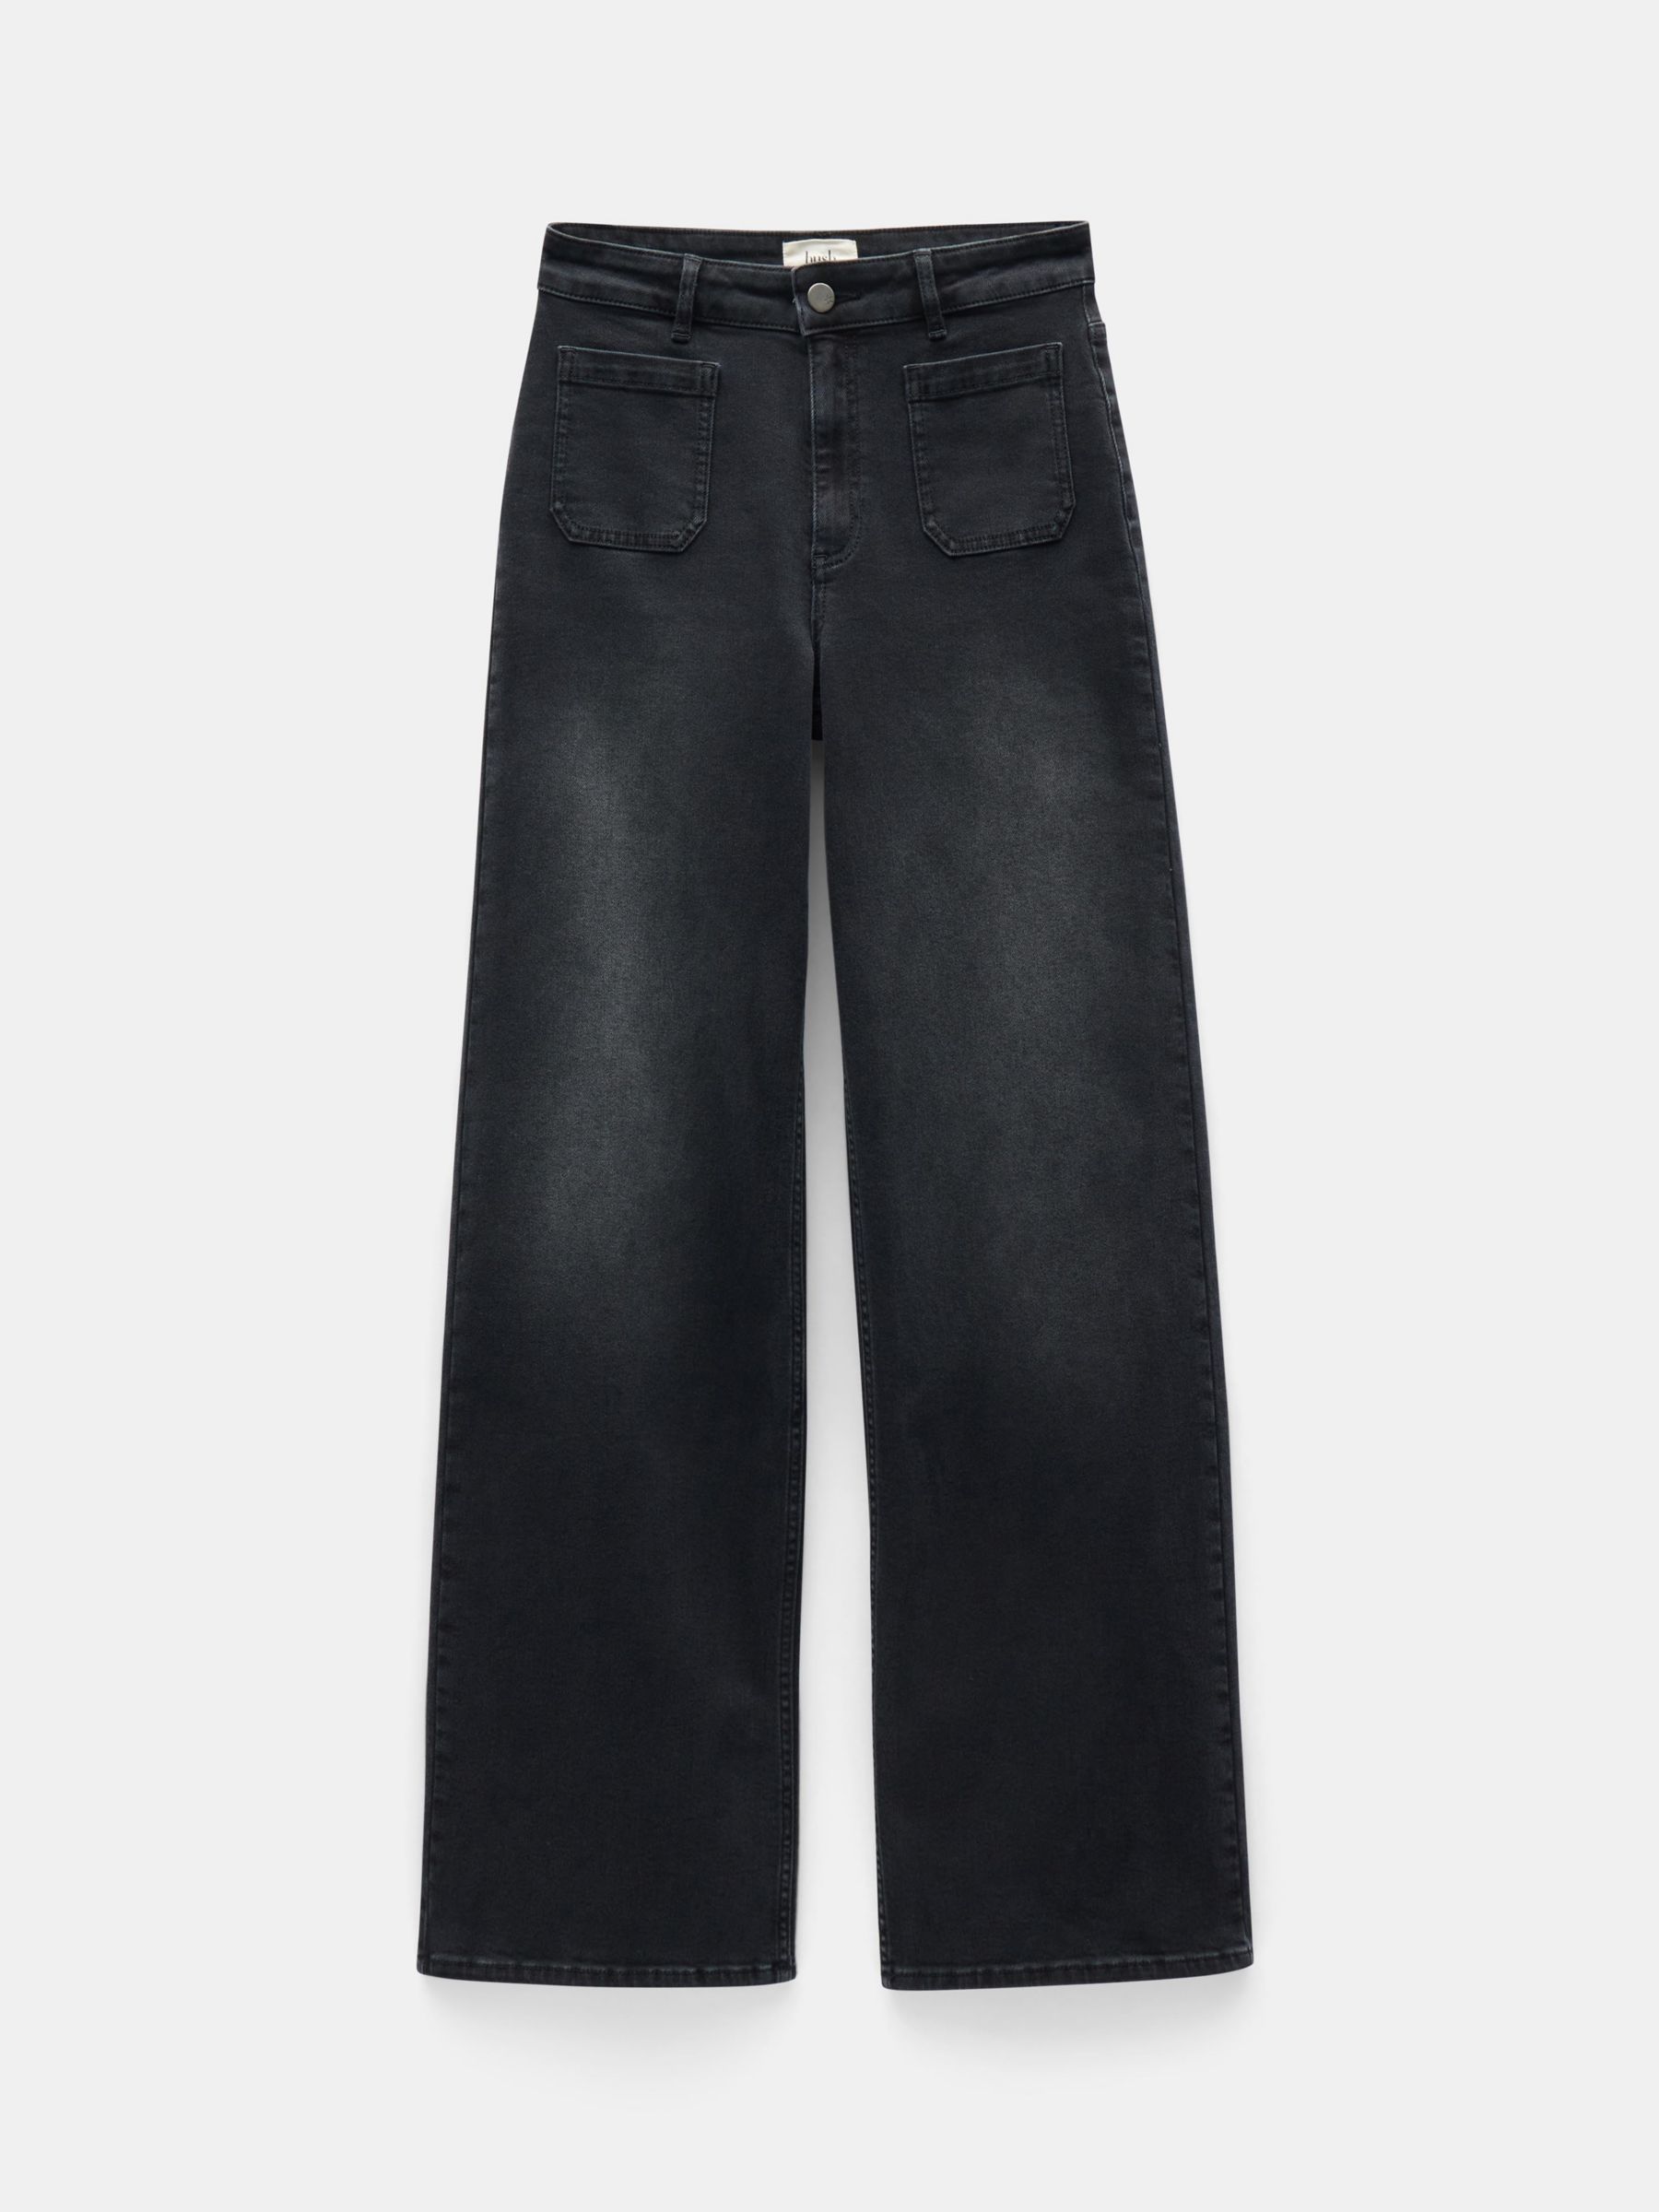 HUSH Rowan Flared Jeans, Washed Black at John Lewis & Partners